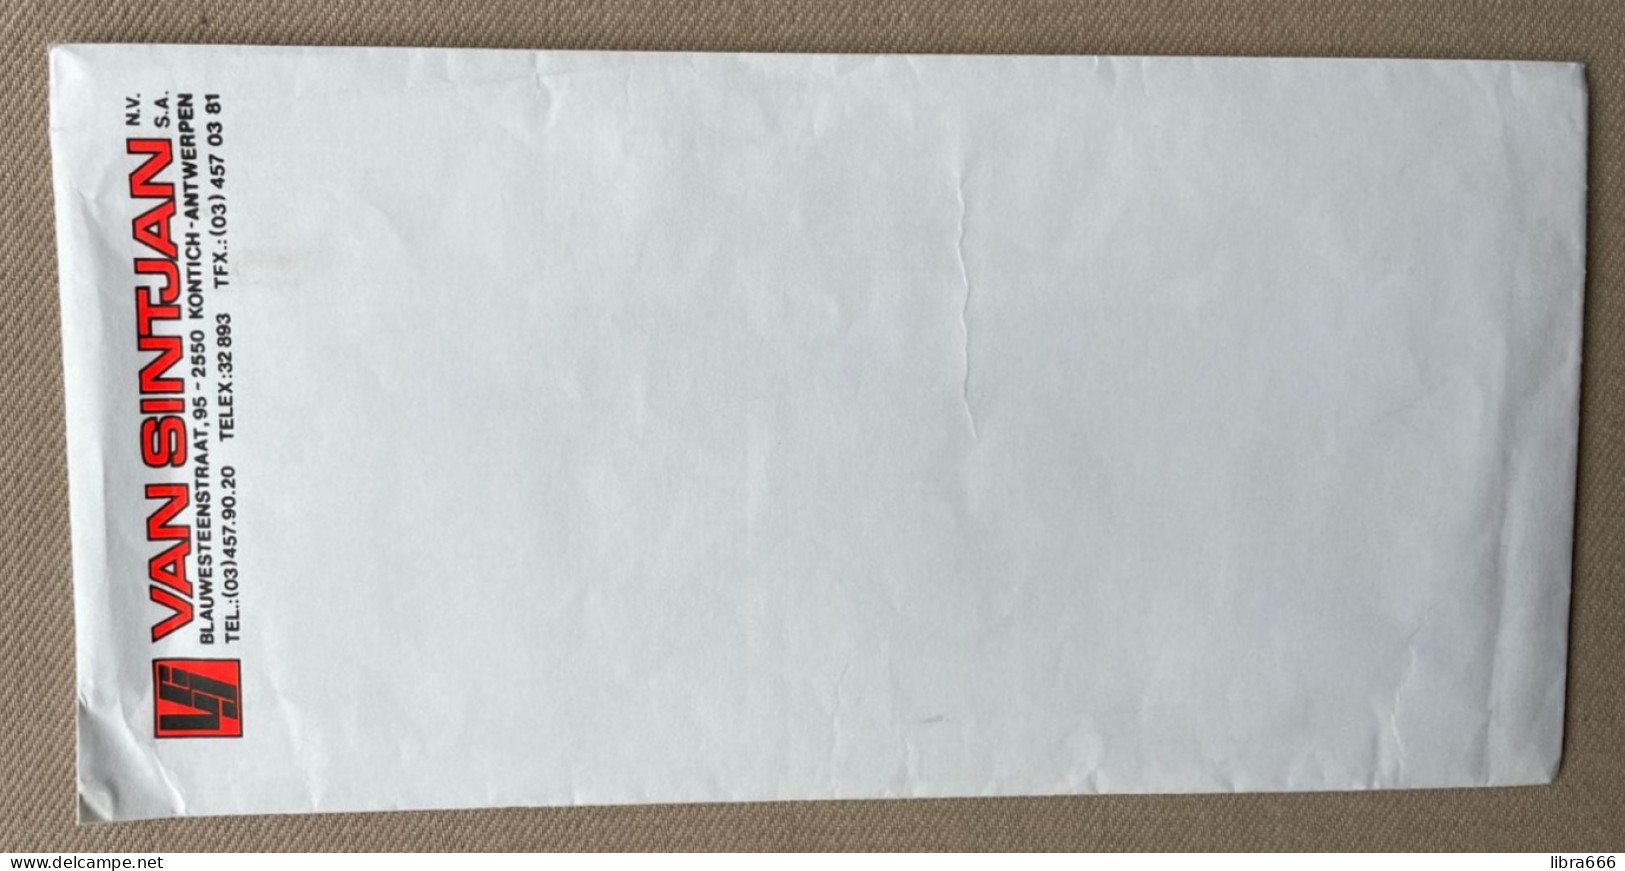 Enveloppe - Envelop / VAN SINTJAN N.v./s.a. - KONTICH - ANTWERPEN - Visitenkarten